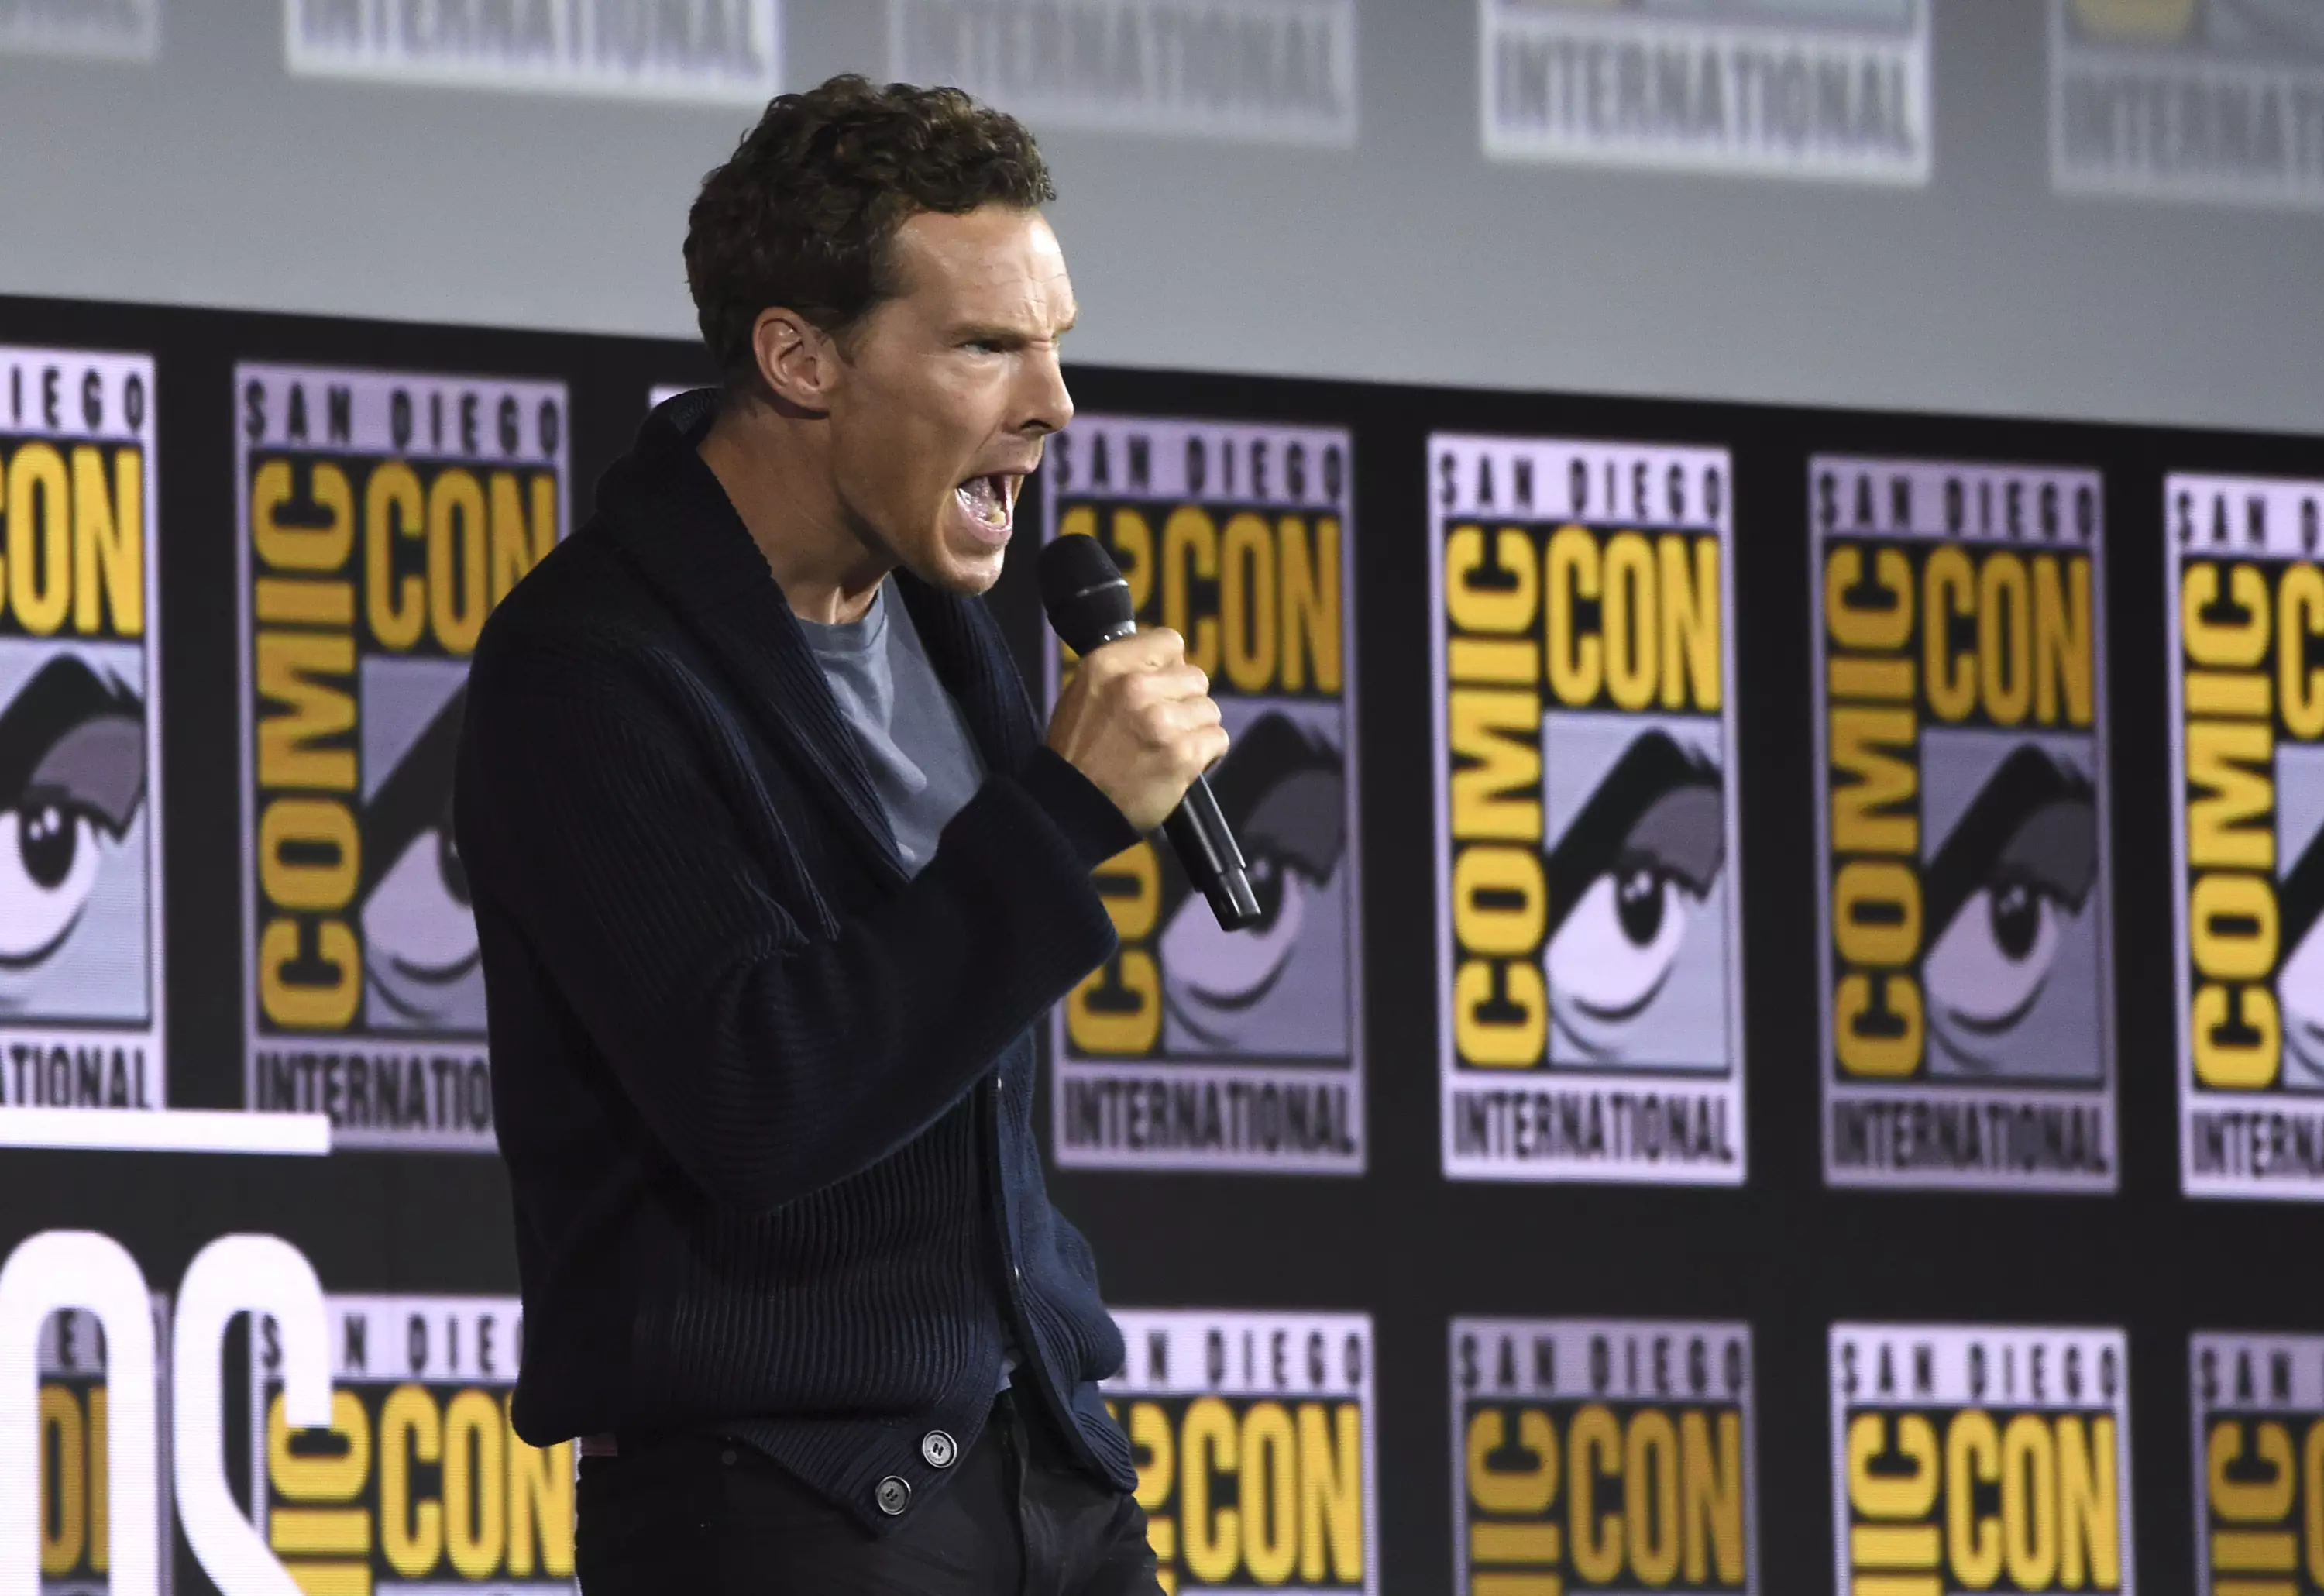 Benedict Cumberbatch addresses the Comic-Con crowd.